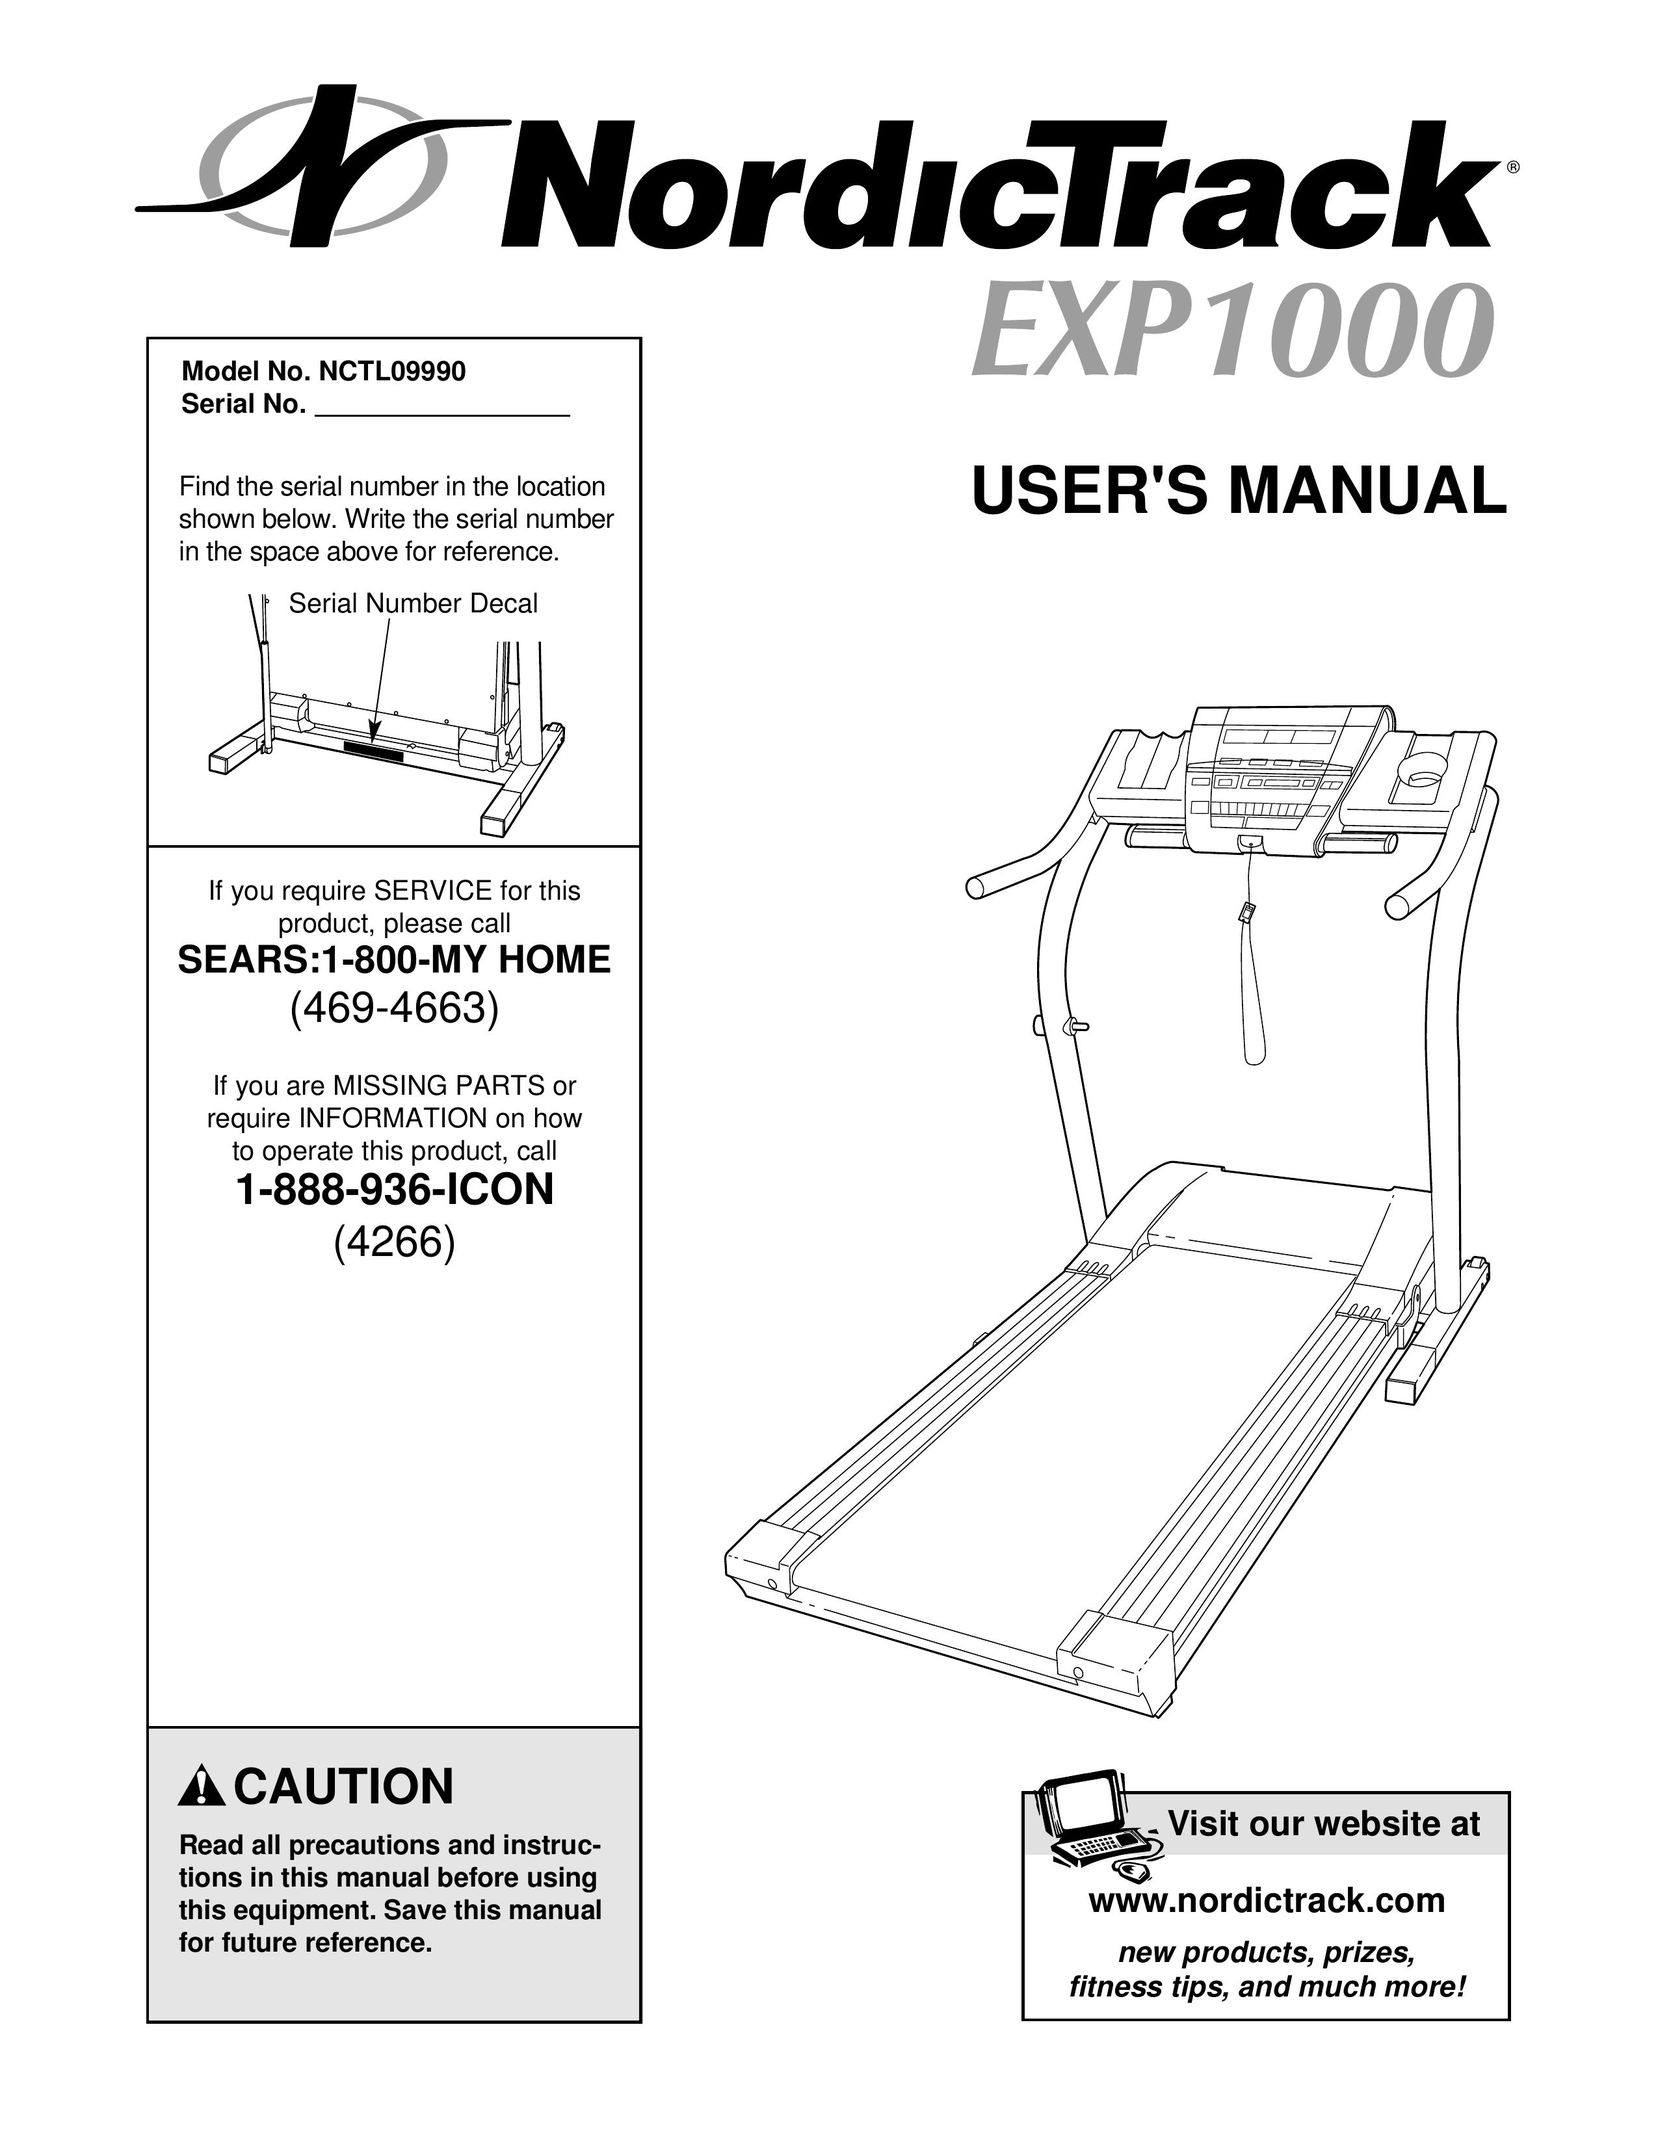 NordicTrack NCTL09990 Treadmill User Manual